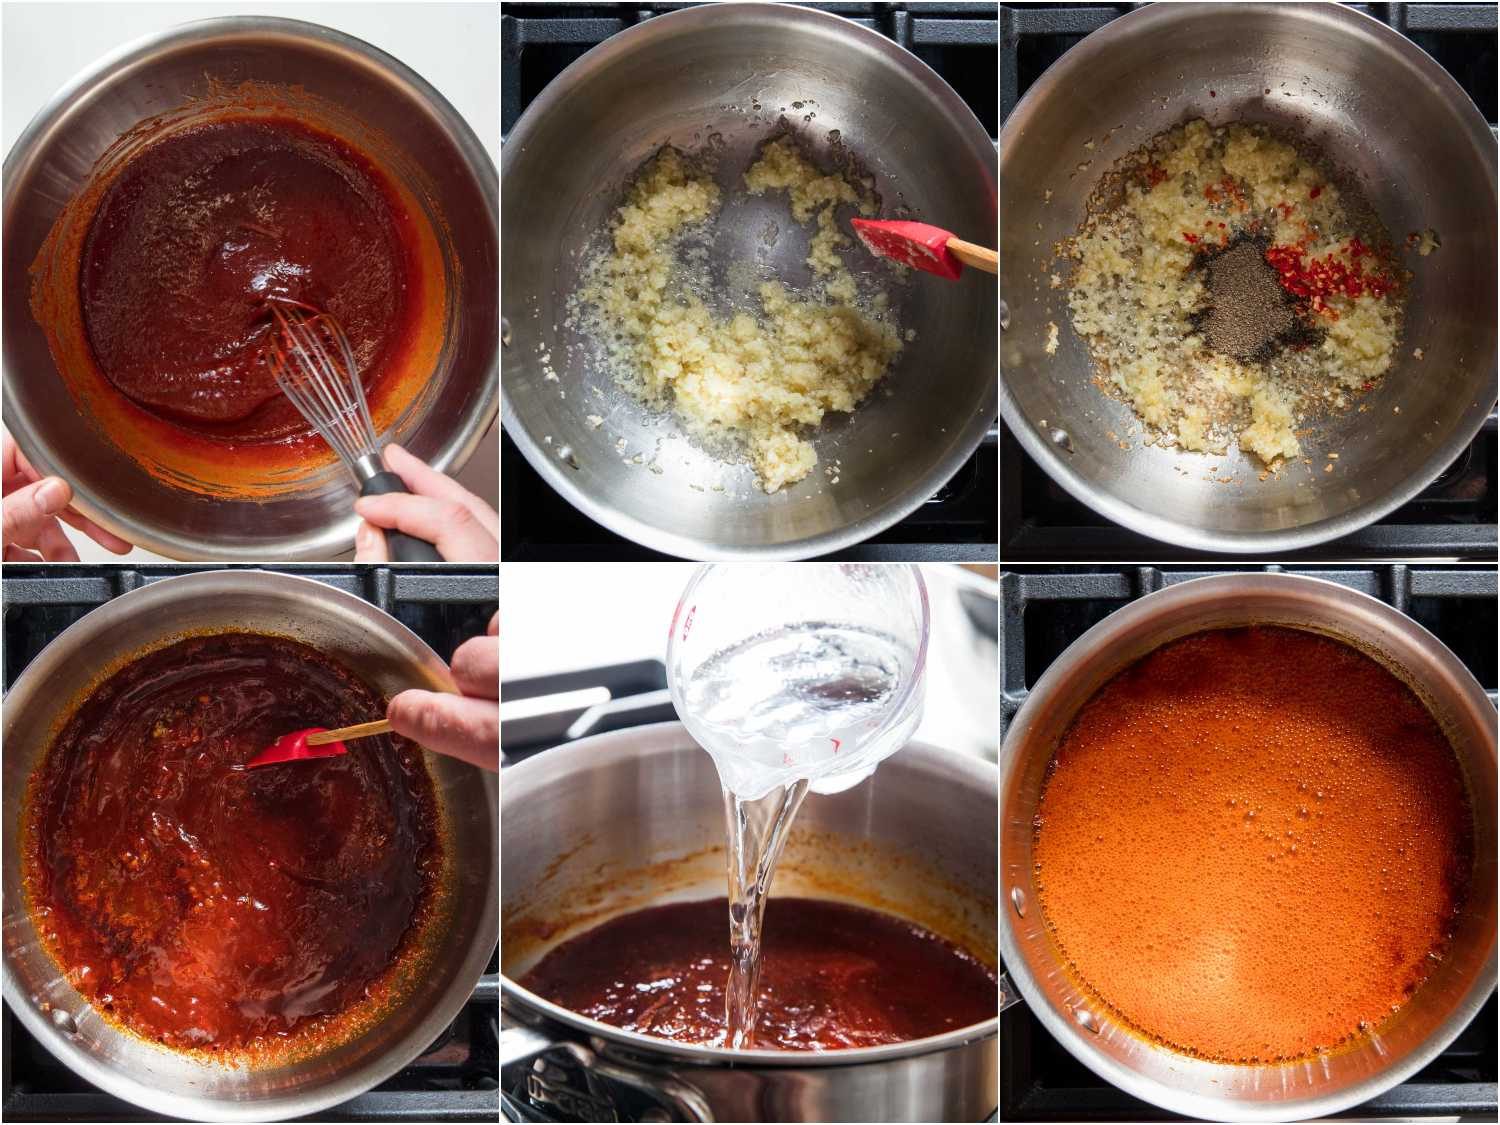 Process shots of making buldak sauce